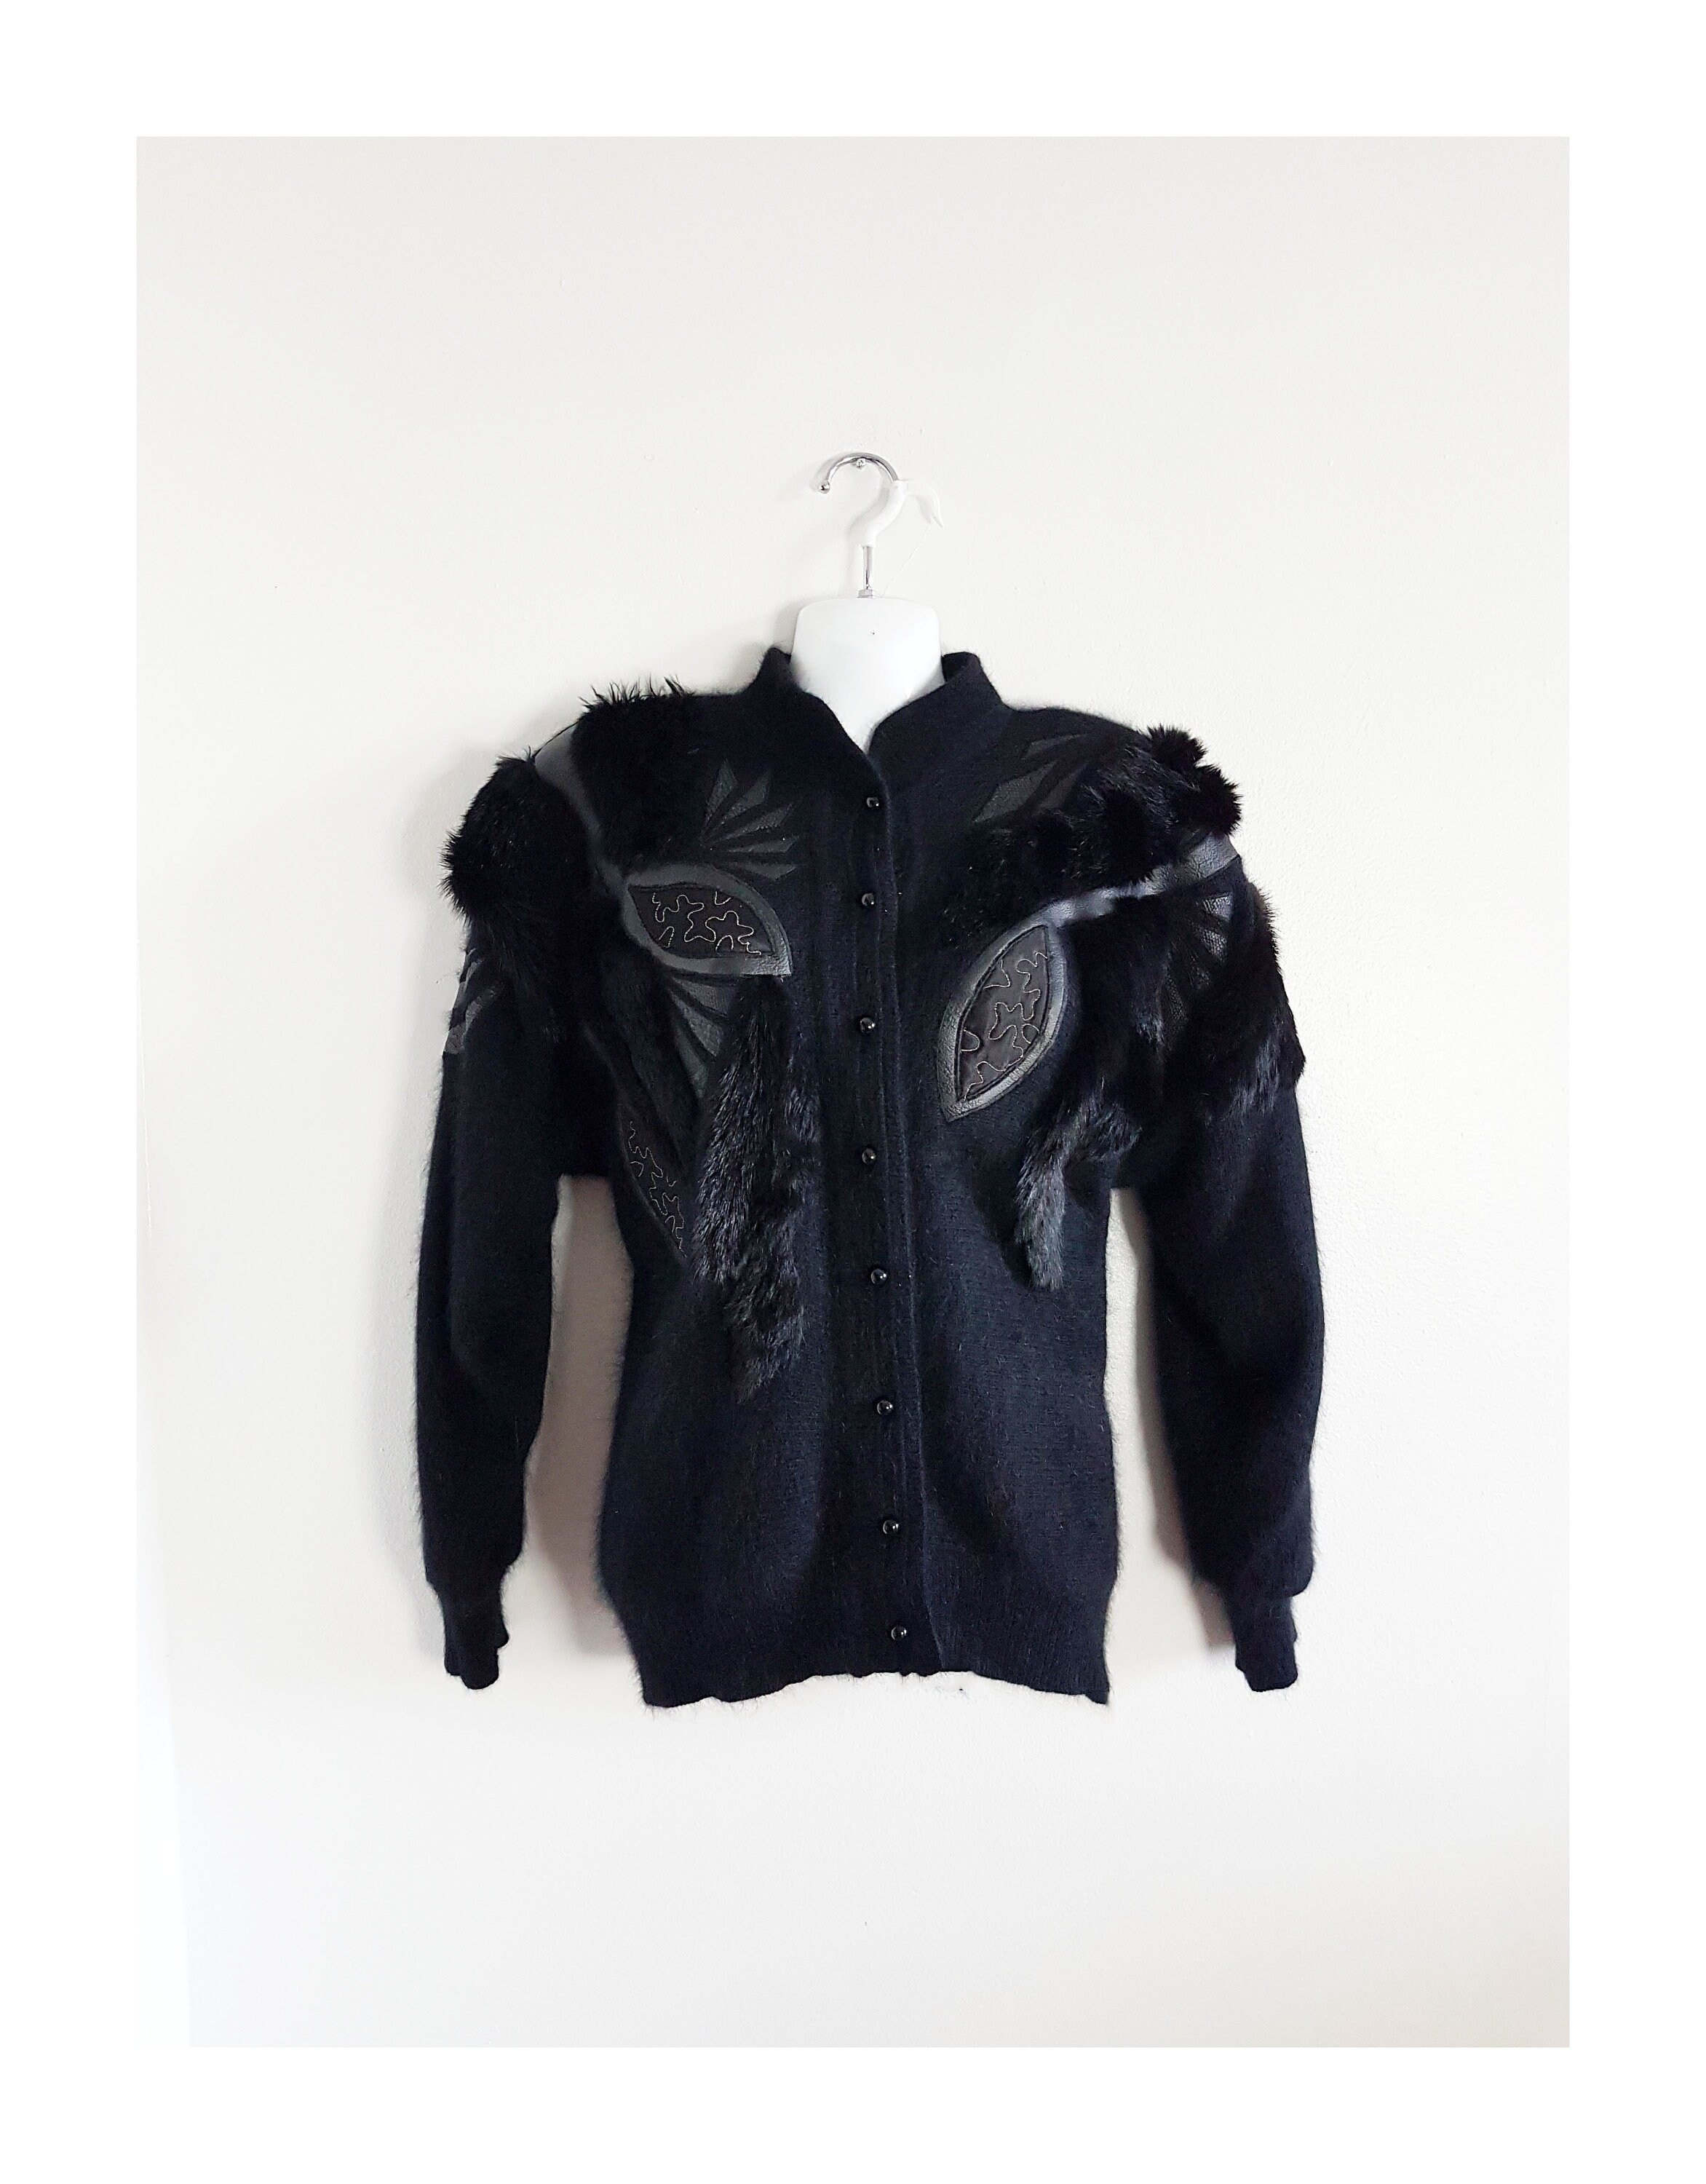 size medium large Vintage 1980s Black Leather Vest with Fuzzy Fur Lining